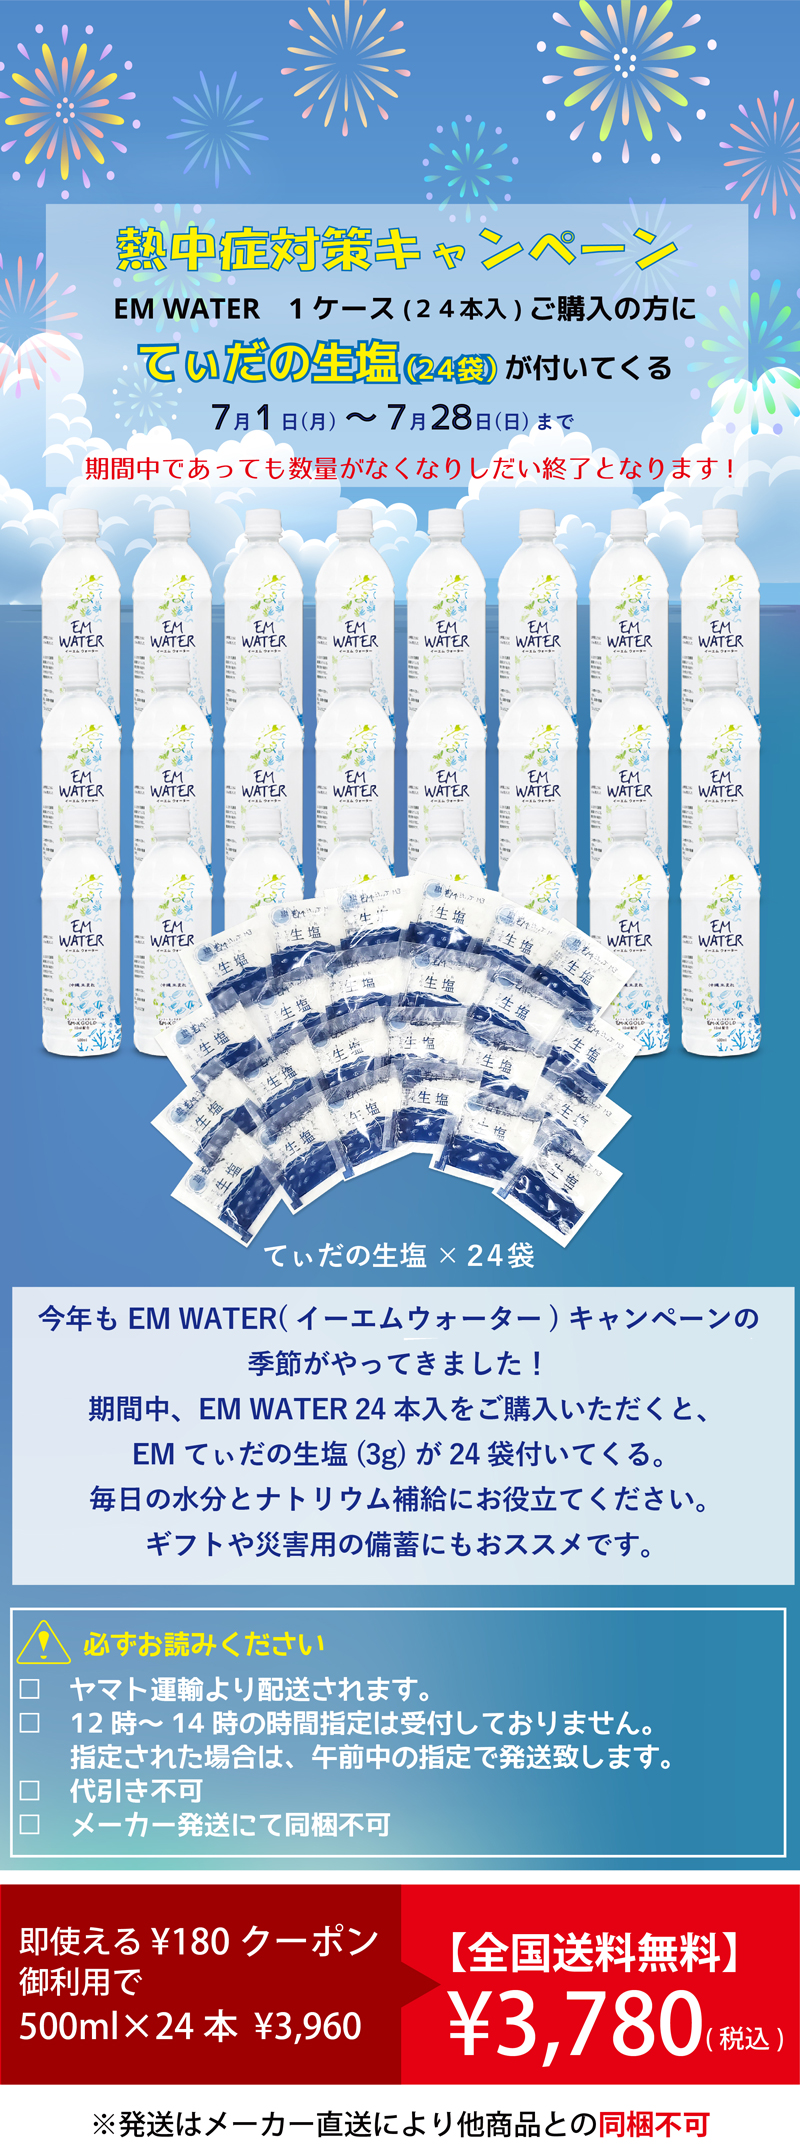 emwater-00ec-campaign.jpg